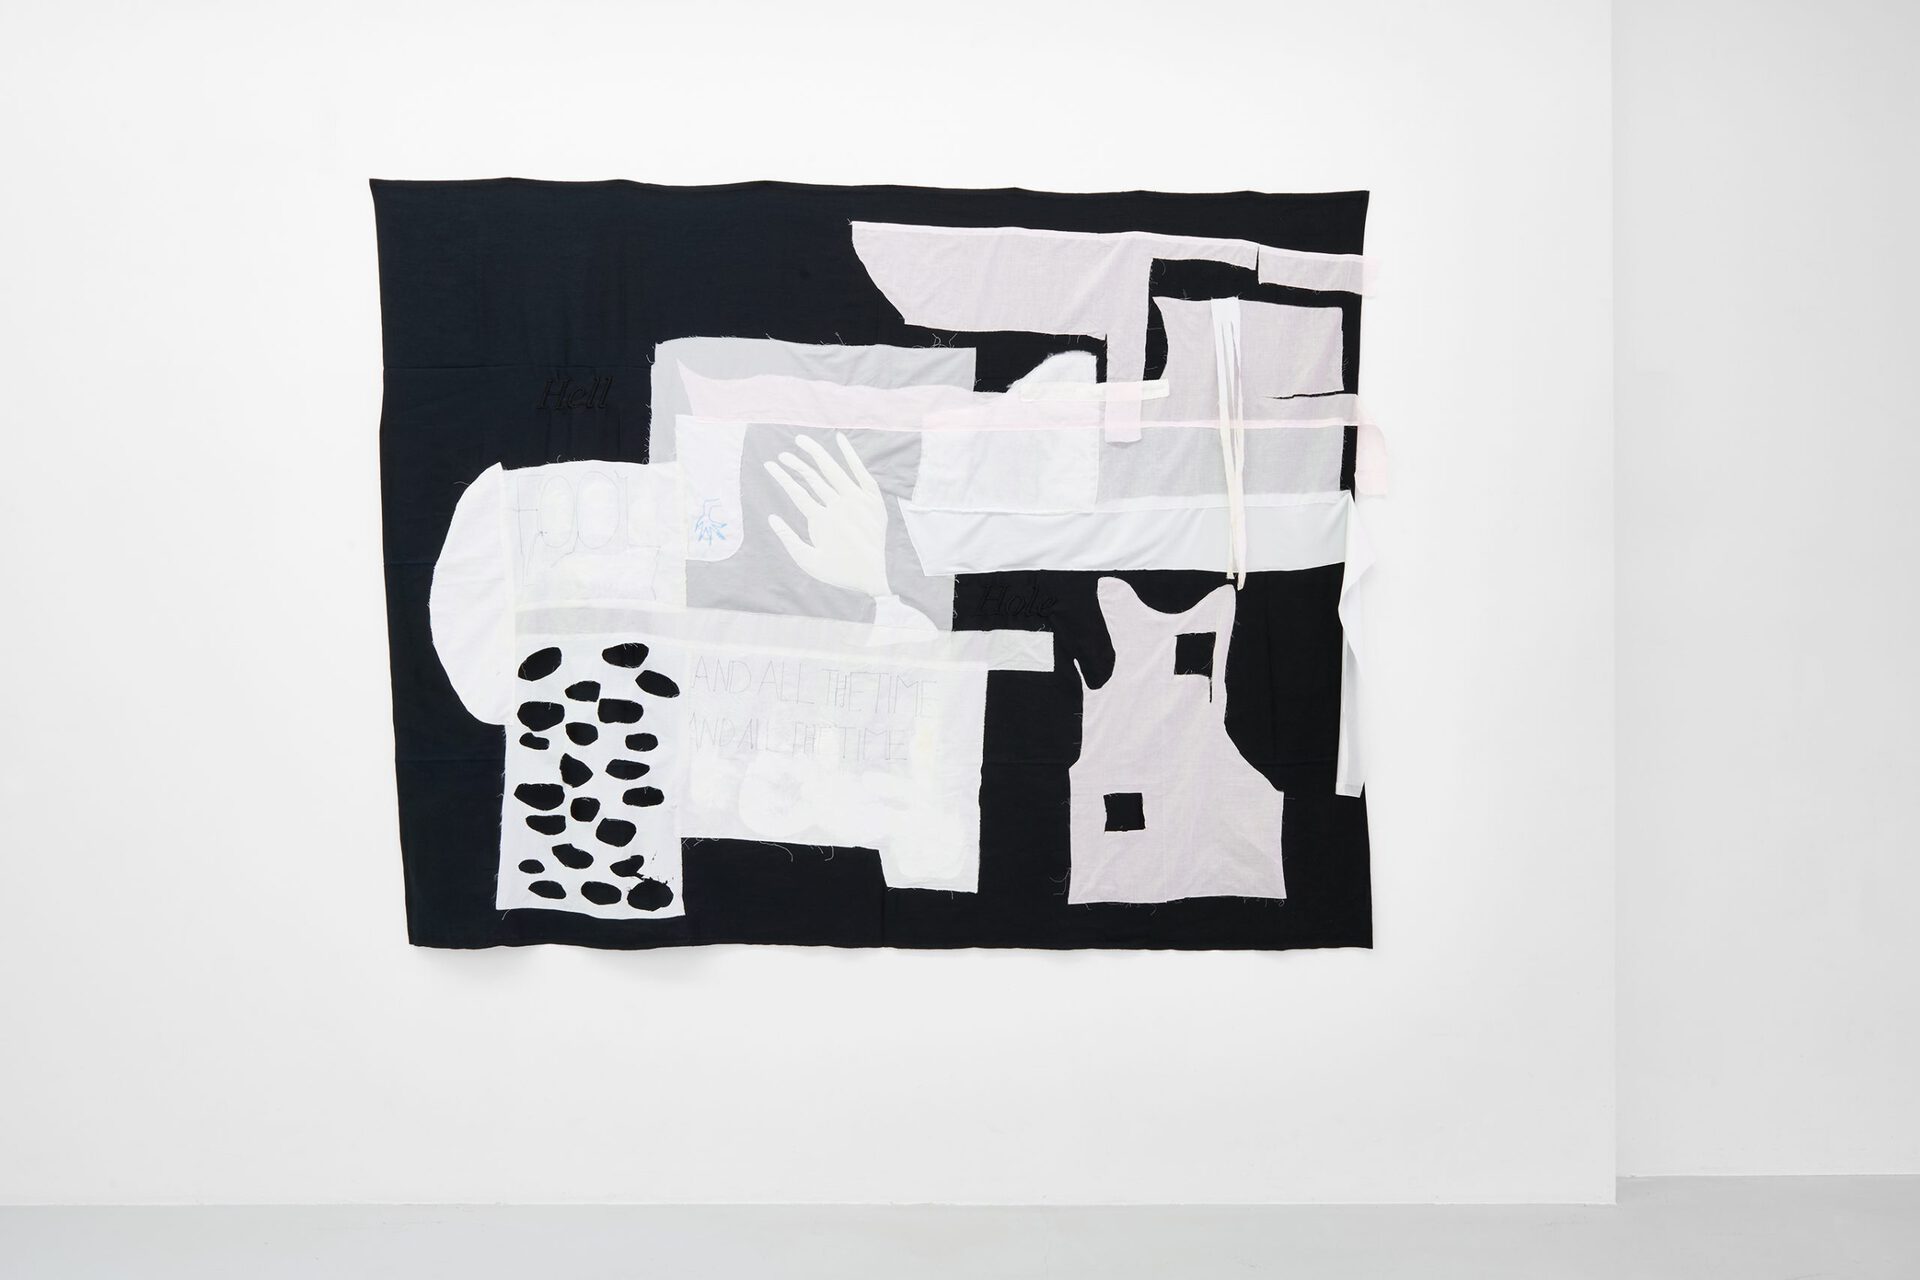 Franca Scholz, KISS ME AGAIN, 2021, tablecloth, cotton textile, lycra, acrylic paint, embroidery, 148 x 193 cm.